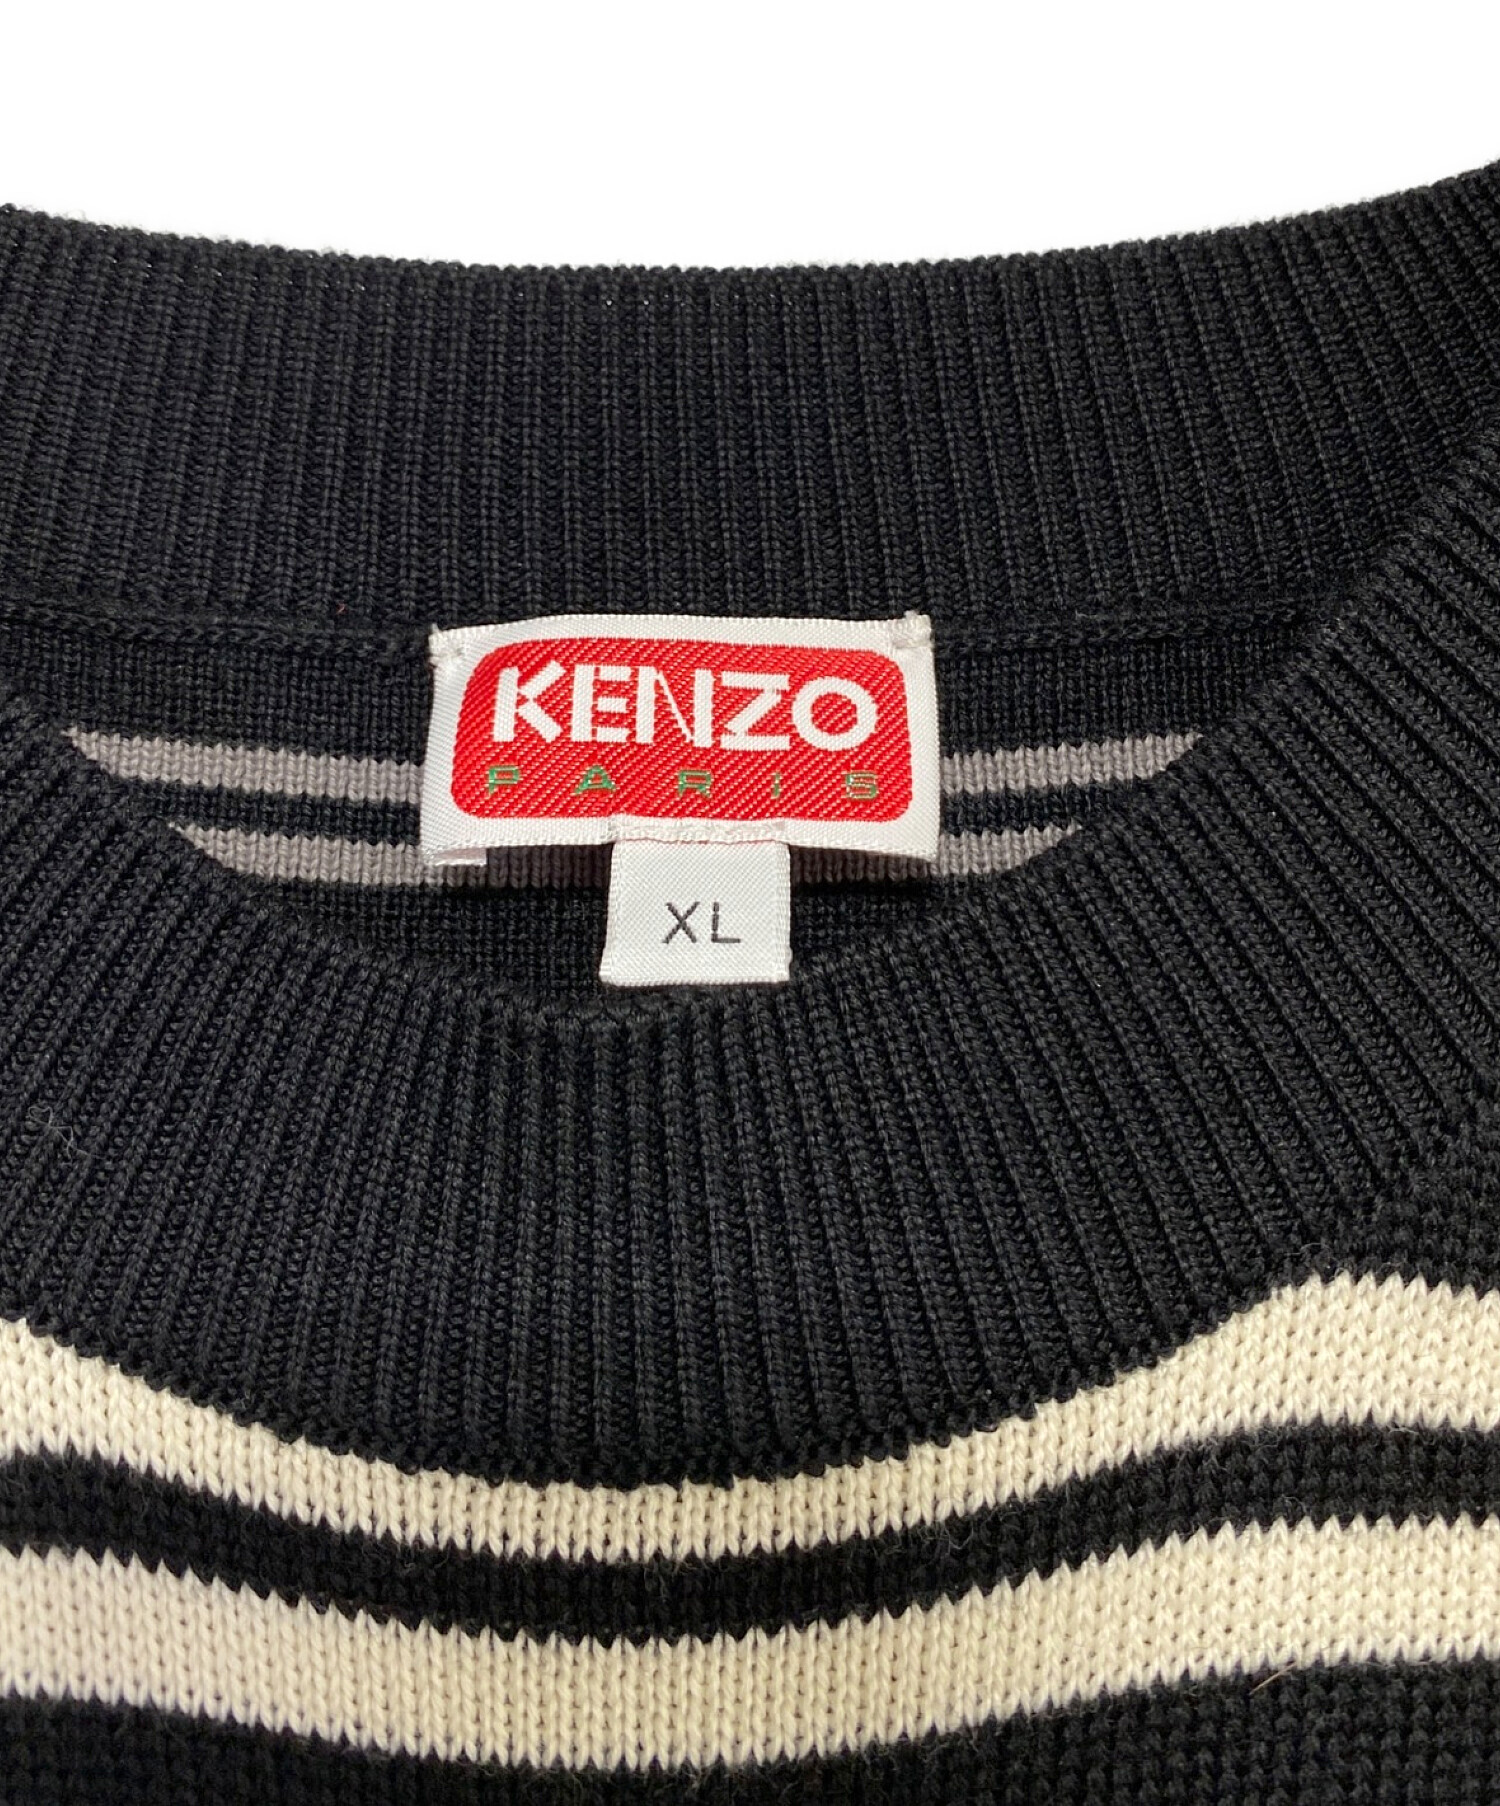 KENZO☆セーター72,600円相当 新品未使用品タグ付き - ニット/セーター